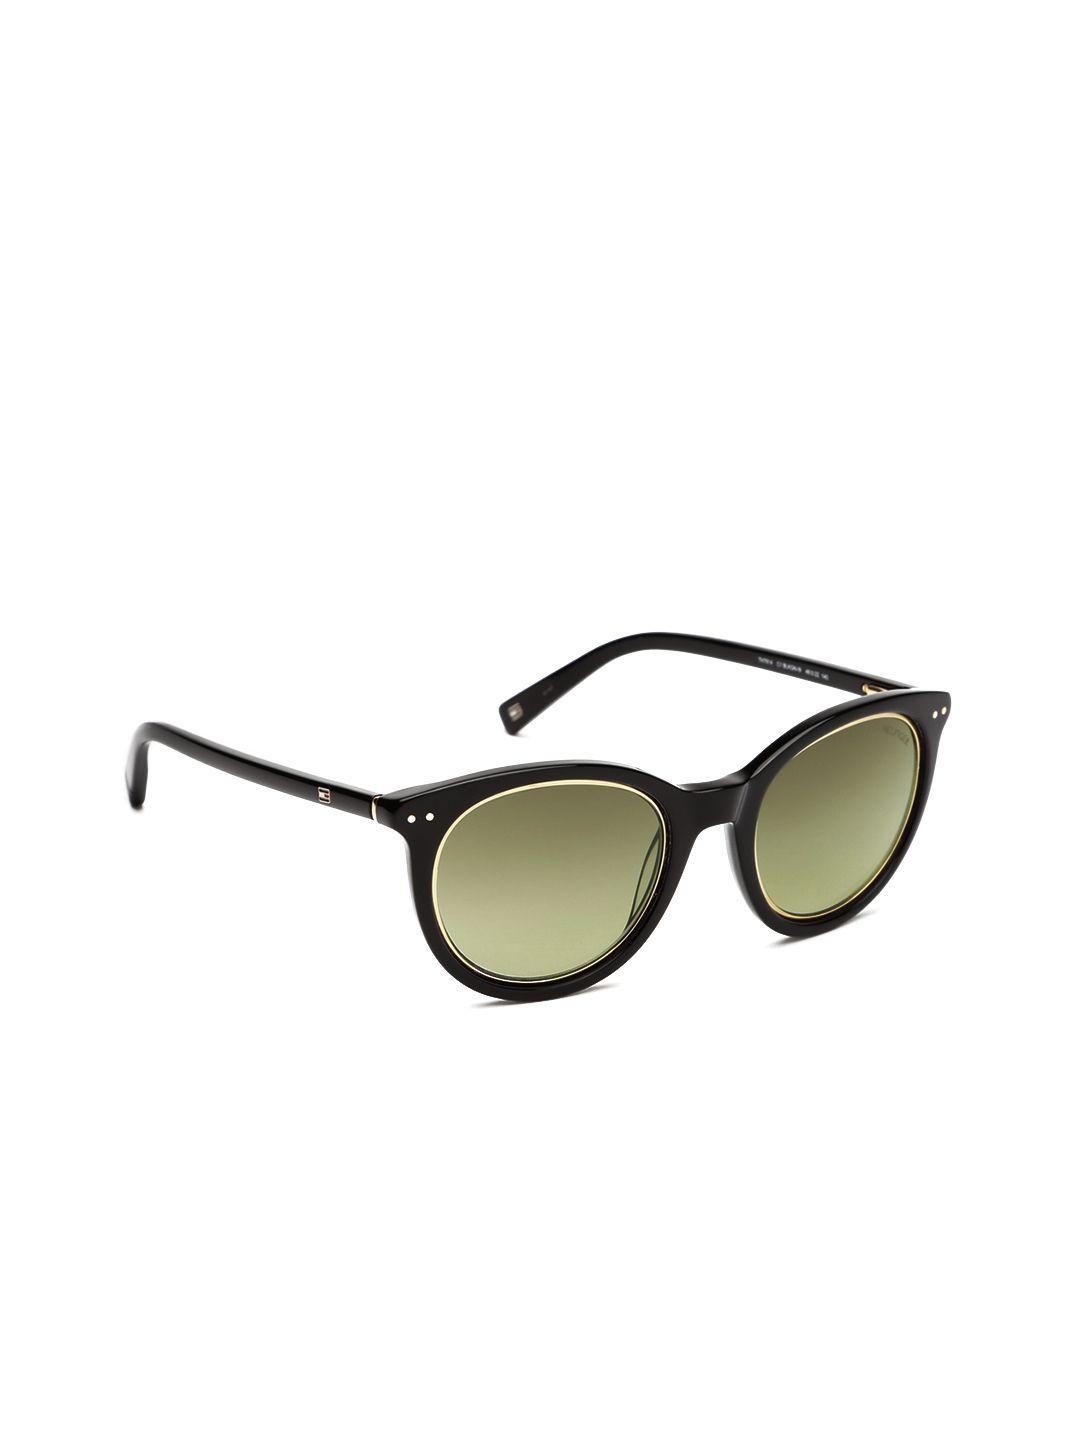 tommy hilfiger unisex oval sunglasses 7914